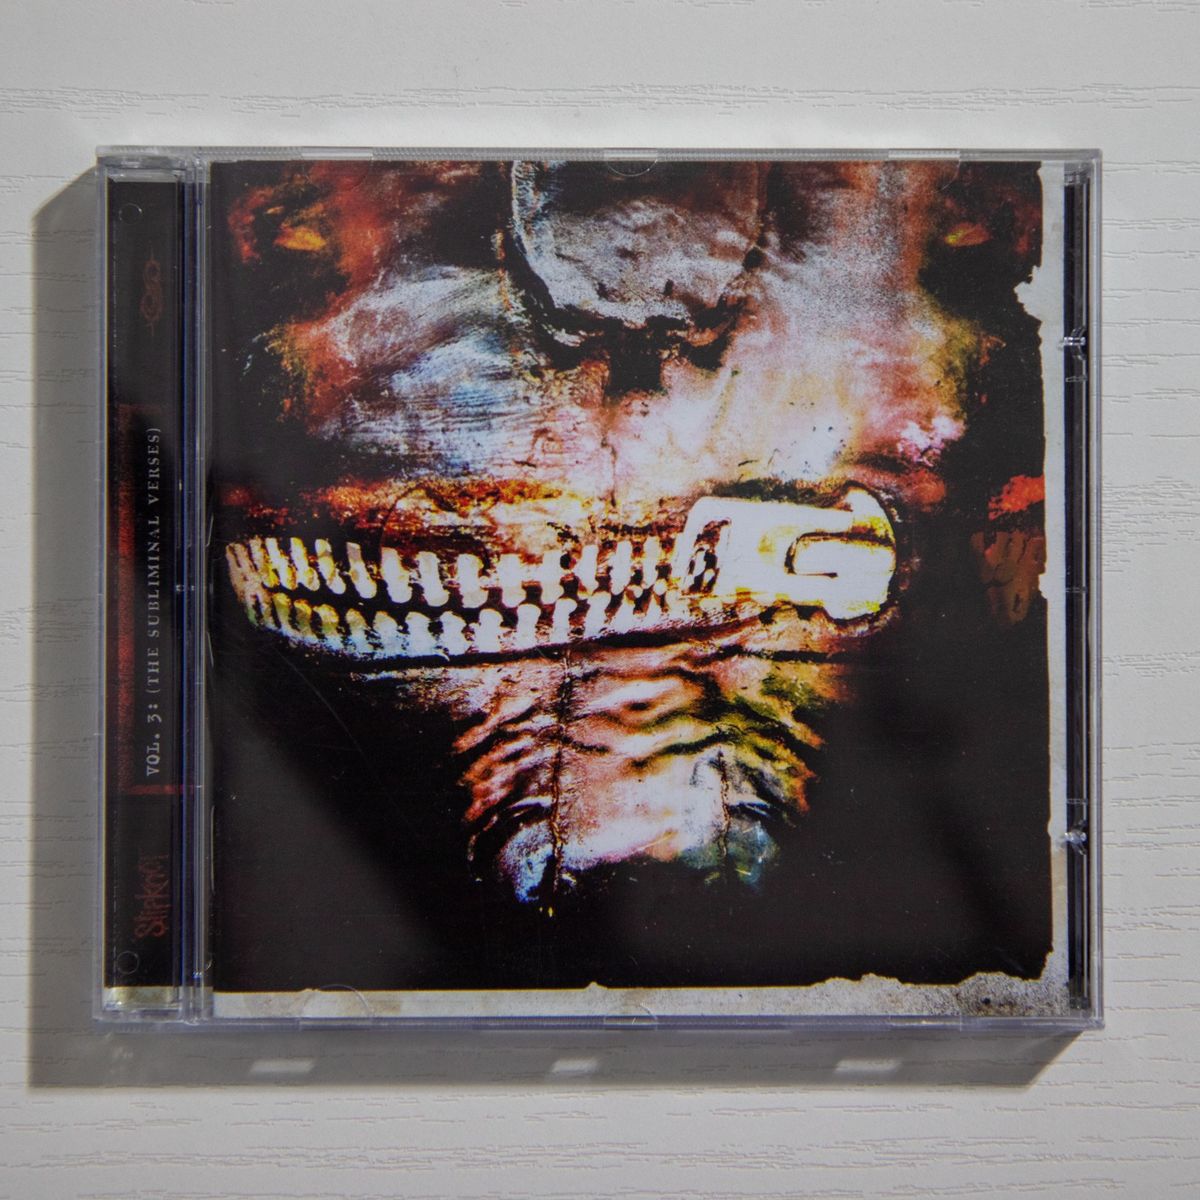 Slipknot - Vol.3 (The Subliminal Verses) - CD